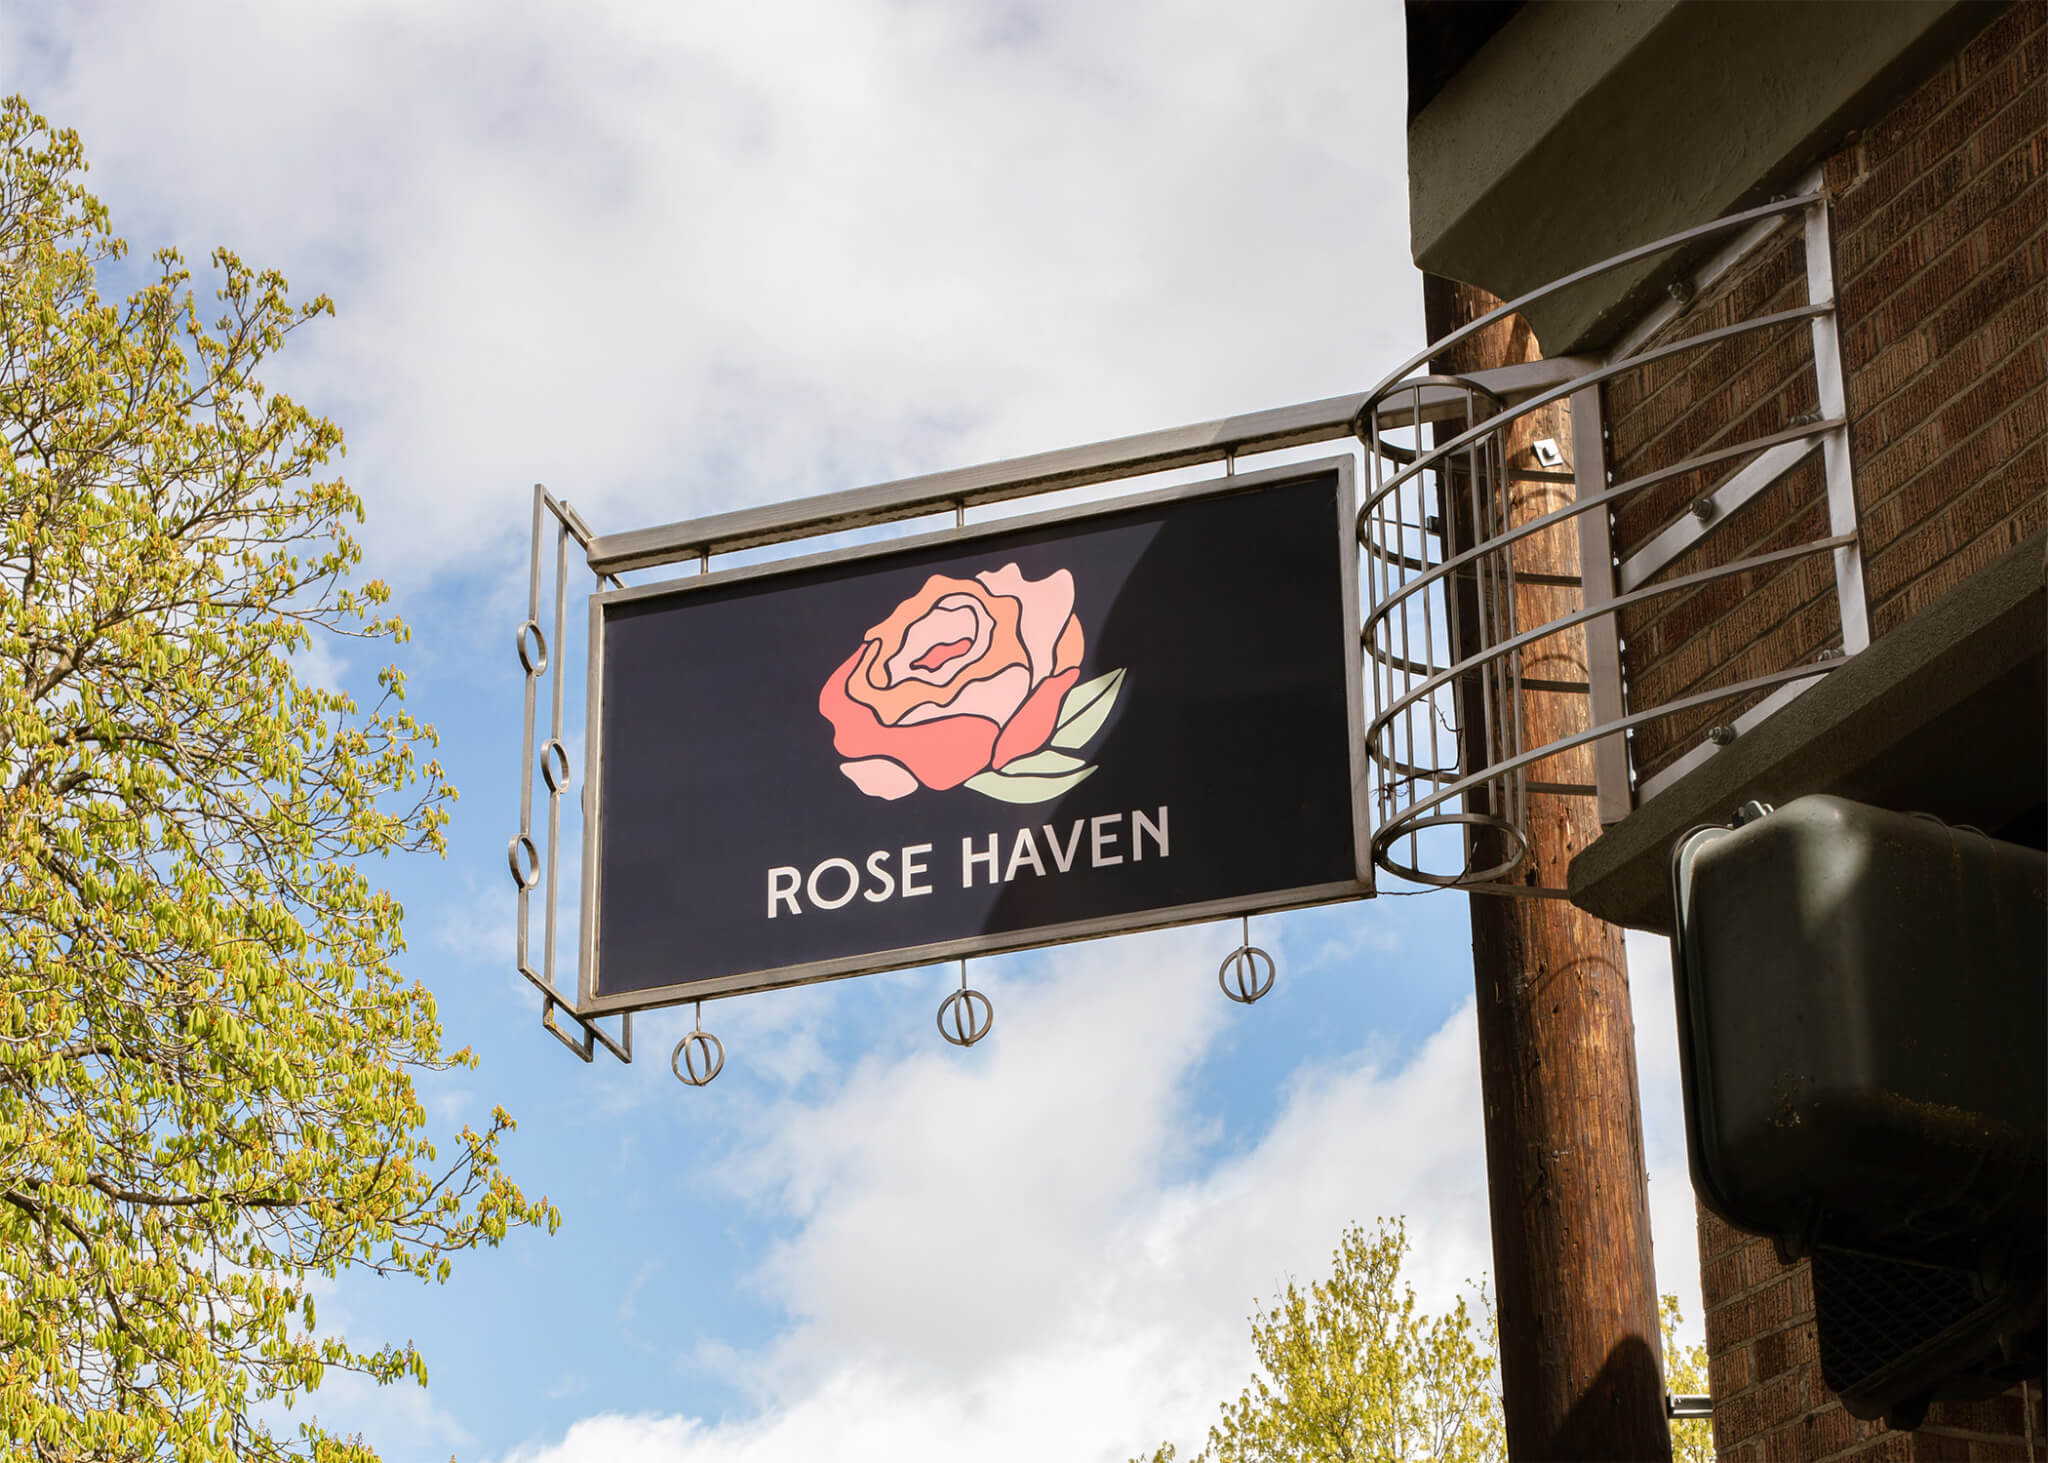 external signage for the portland nonprofit Rose Haven